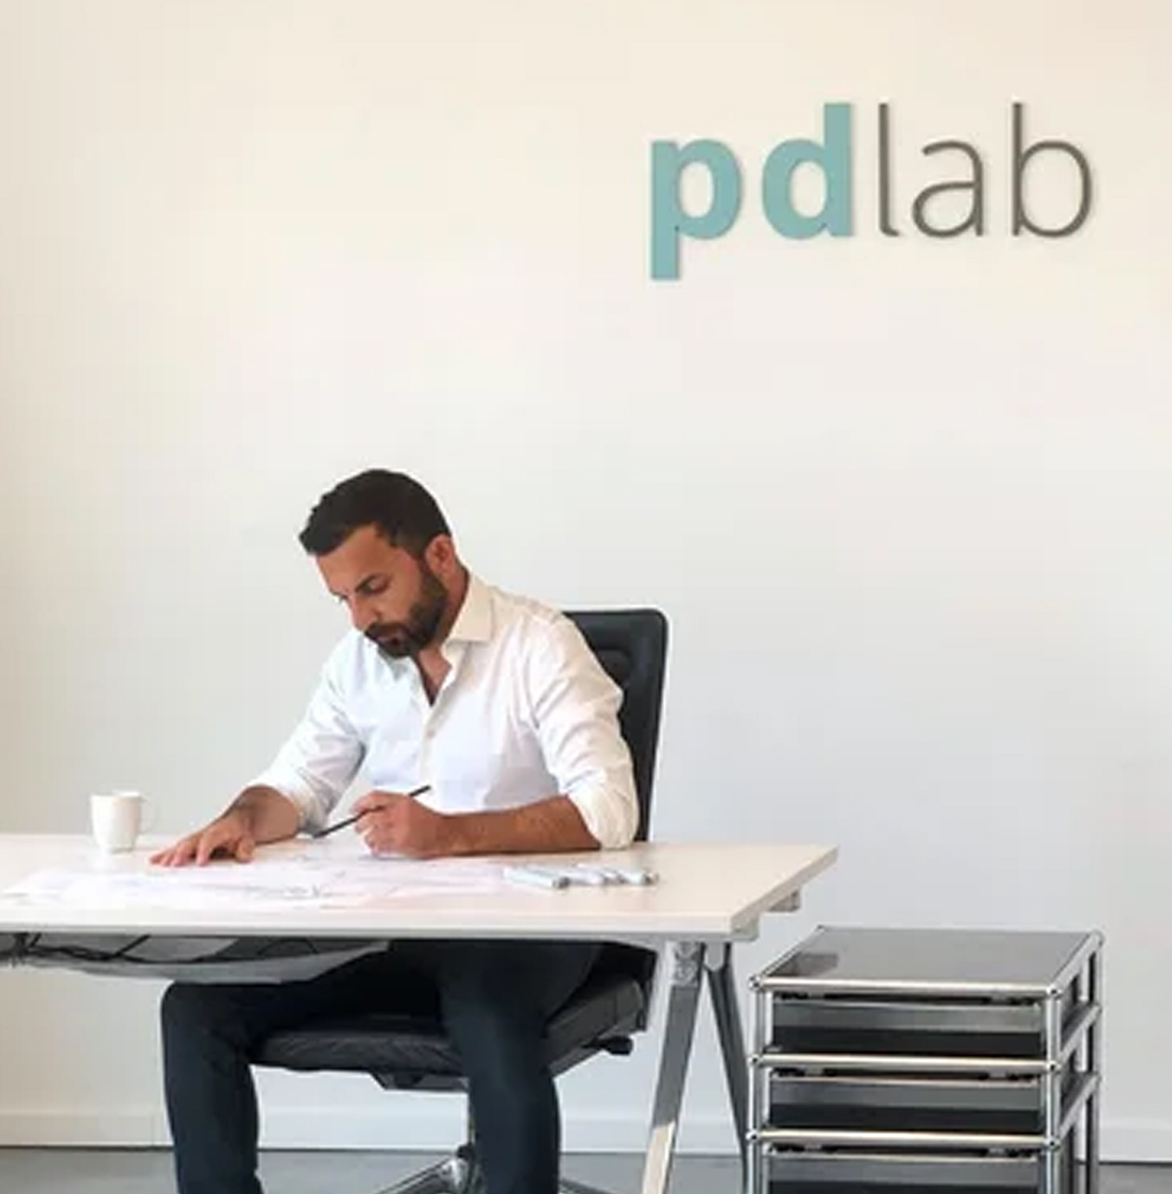 pdlab - the design innovation lab